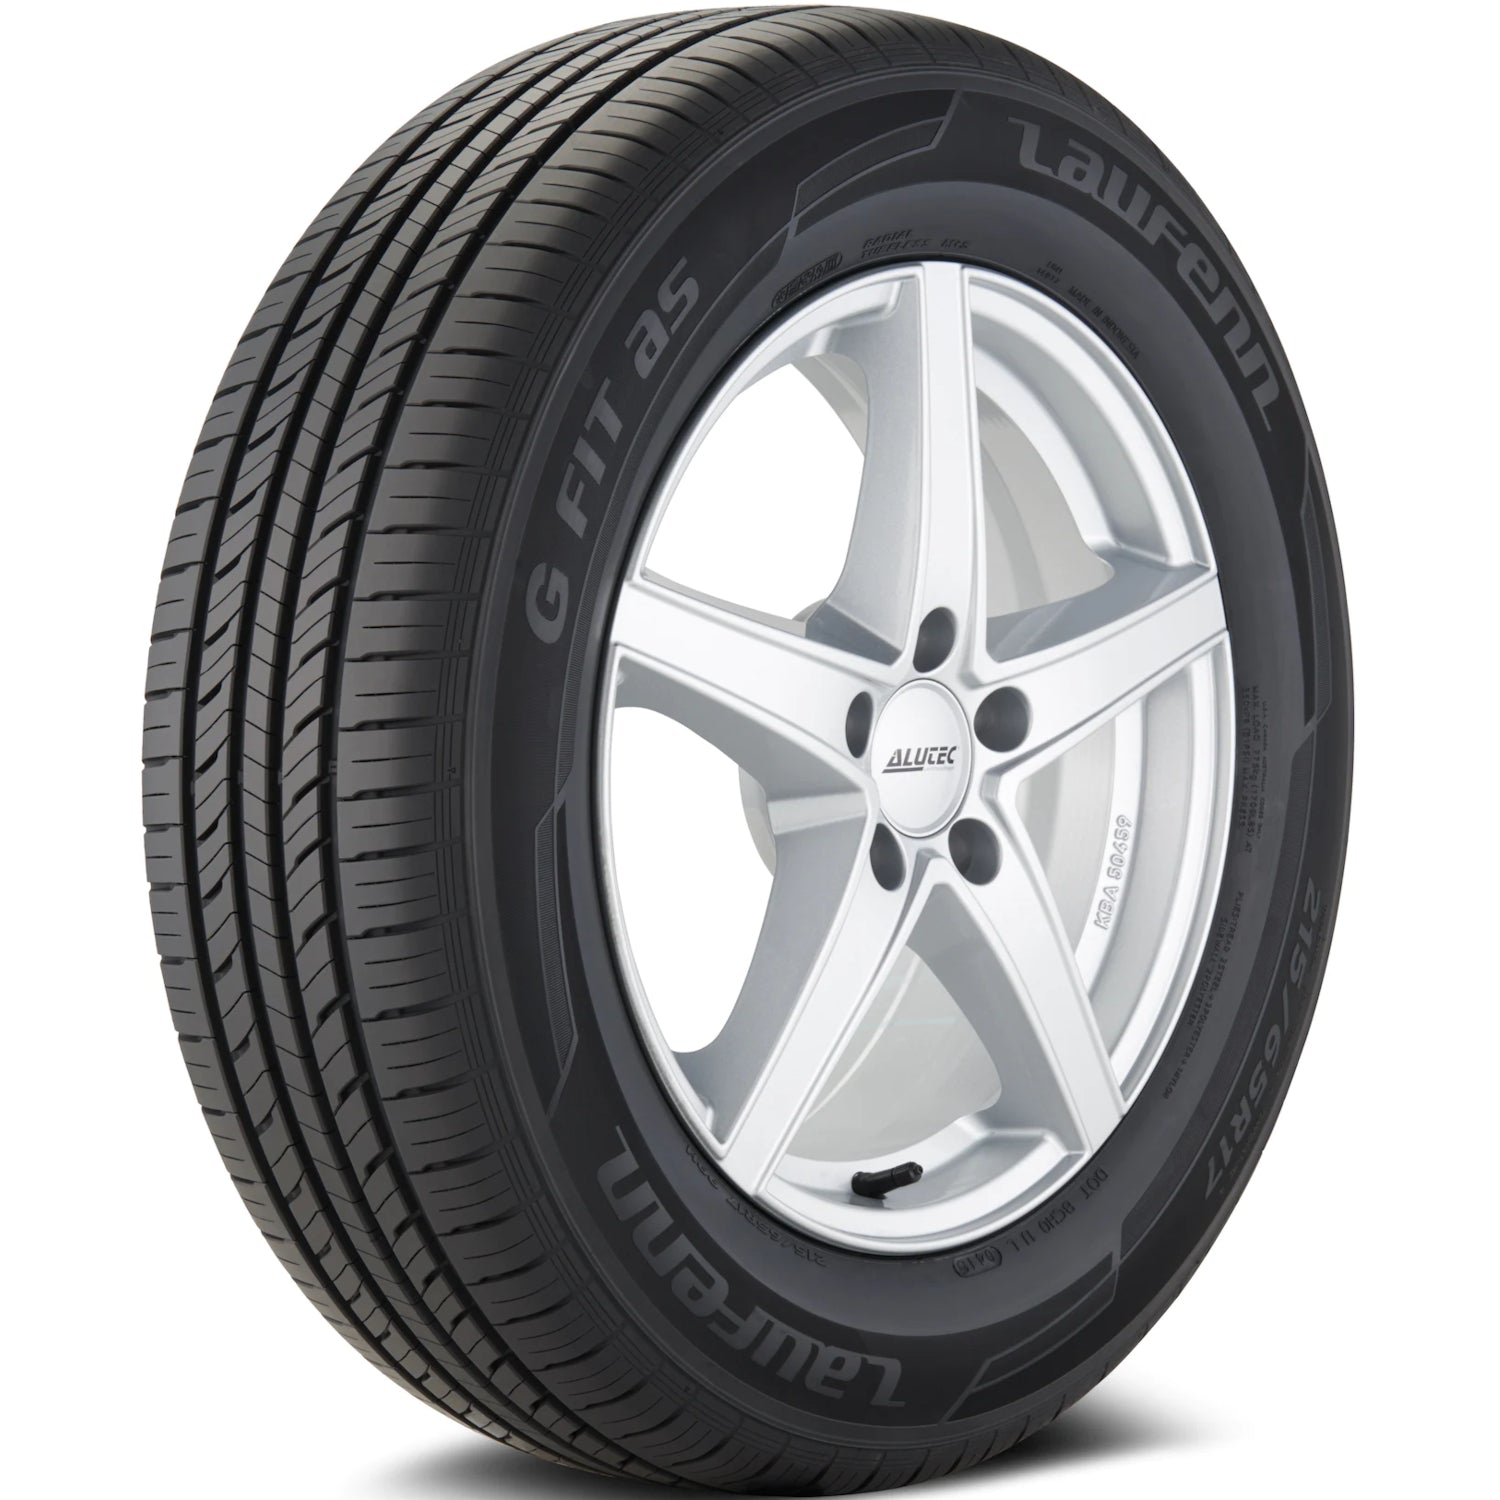 LAUFENN G FIT AS 215/60R15 (25.2X8.5R 15) Tires